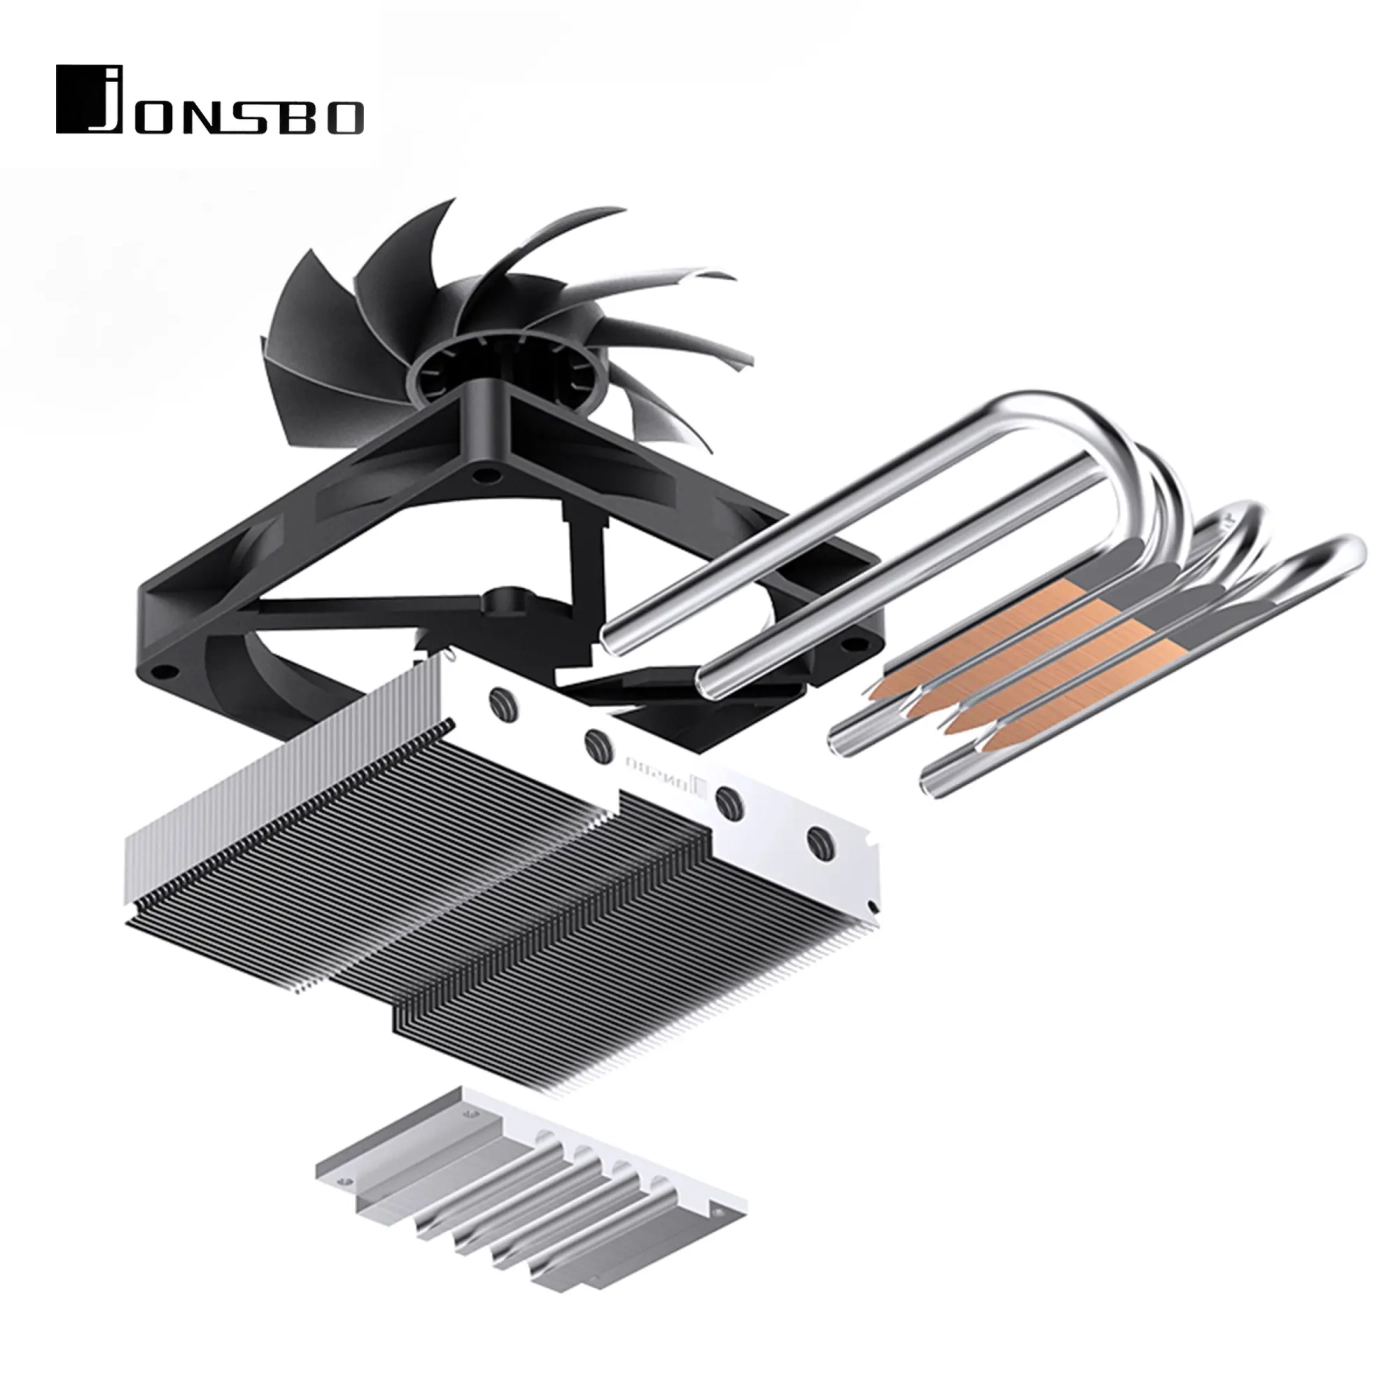 Купить Процессорный кулер JONSBO HP-400S Black (HP400S Black) - фото 8